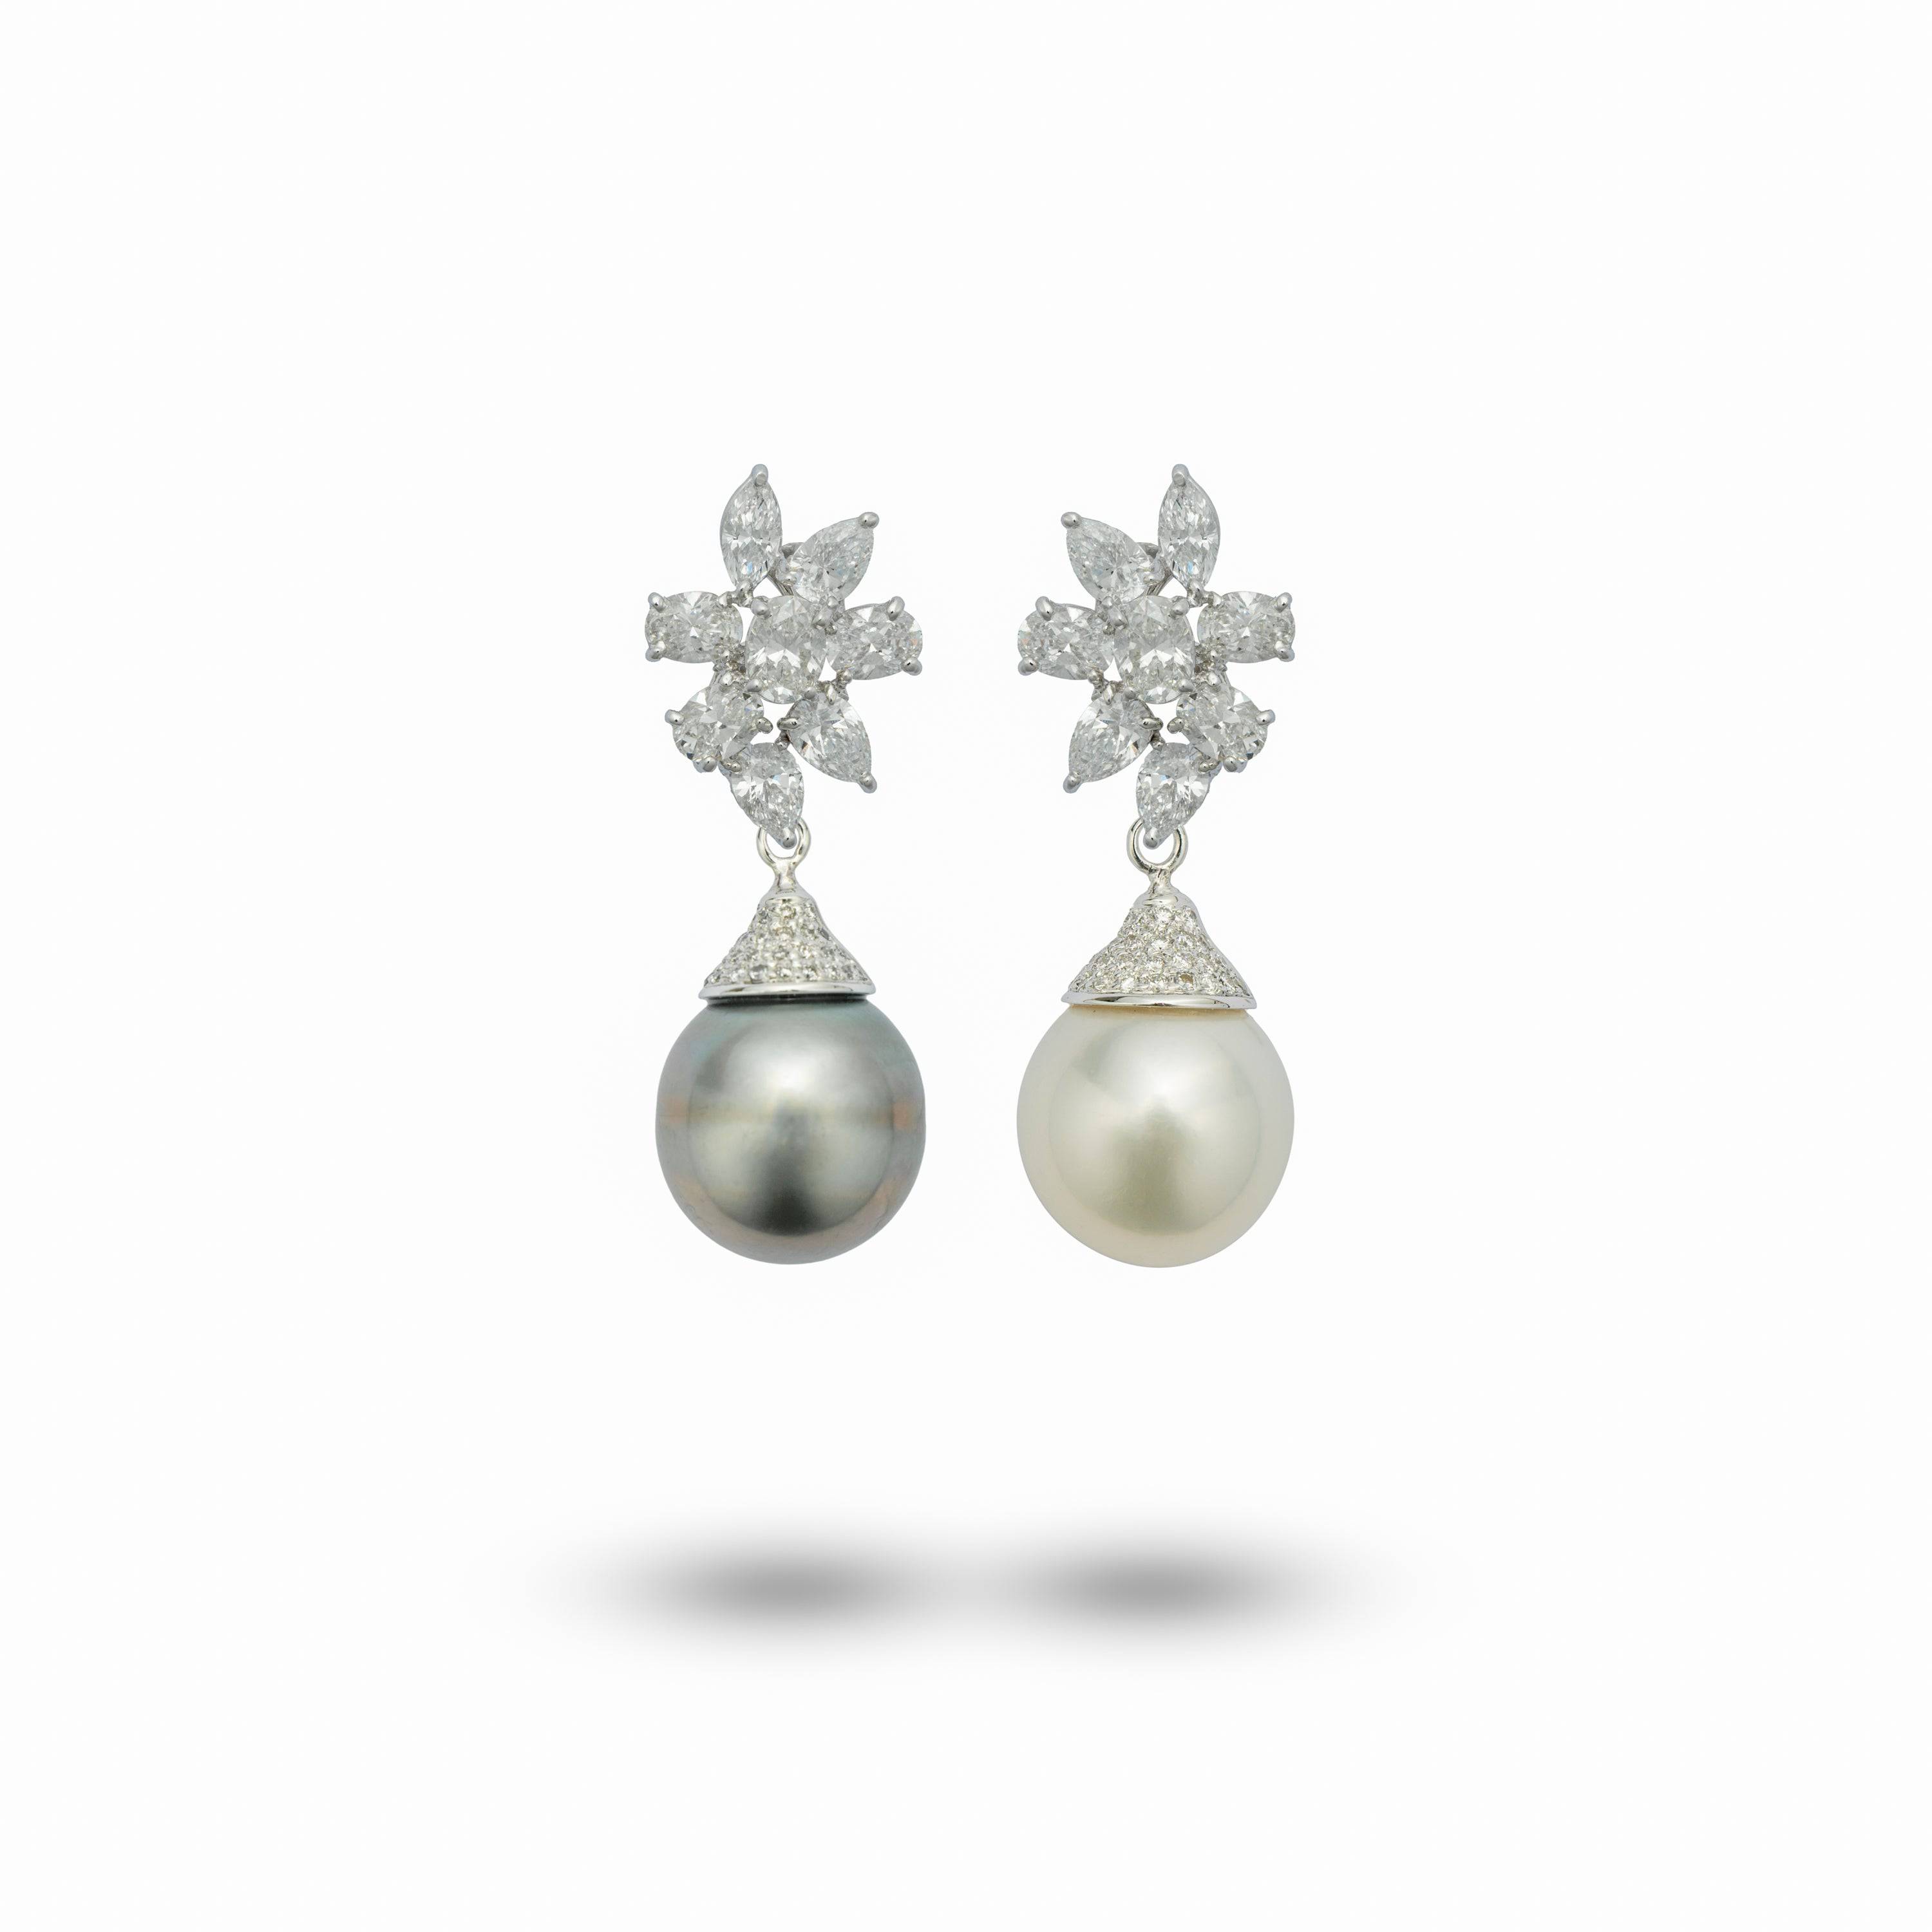 transformational-diamond-south-sea-pearl-earrings-43627911774372.jpg